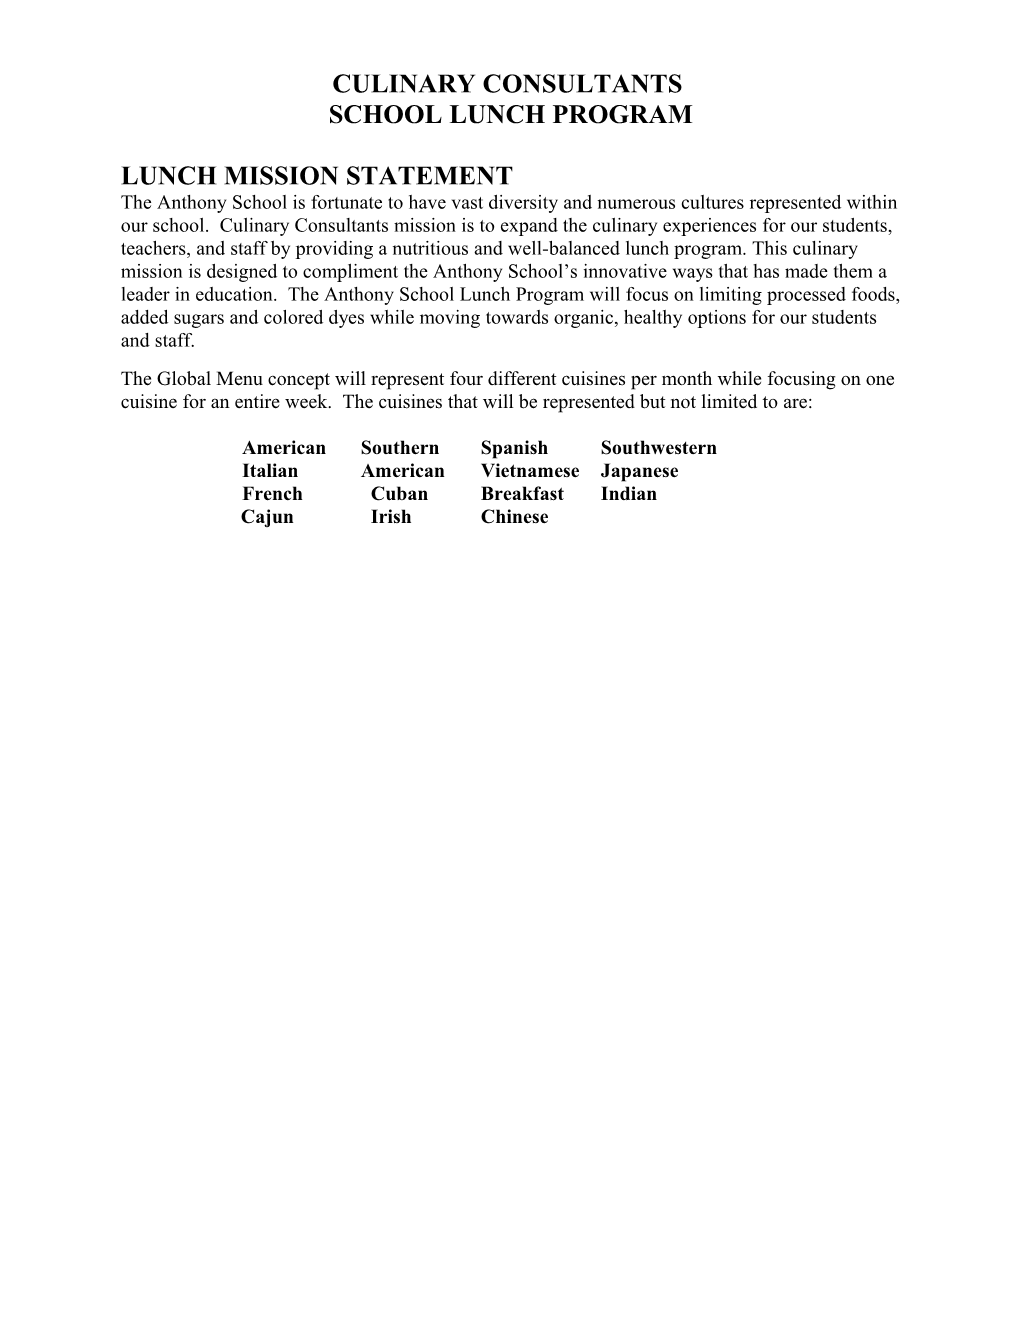 Anthony School Lunch Program